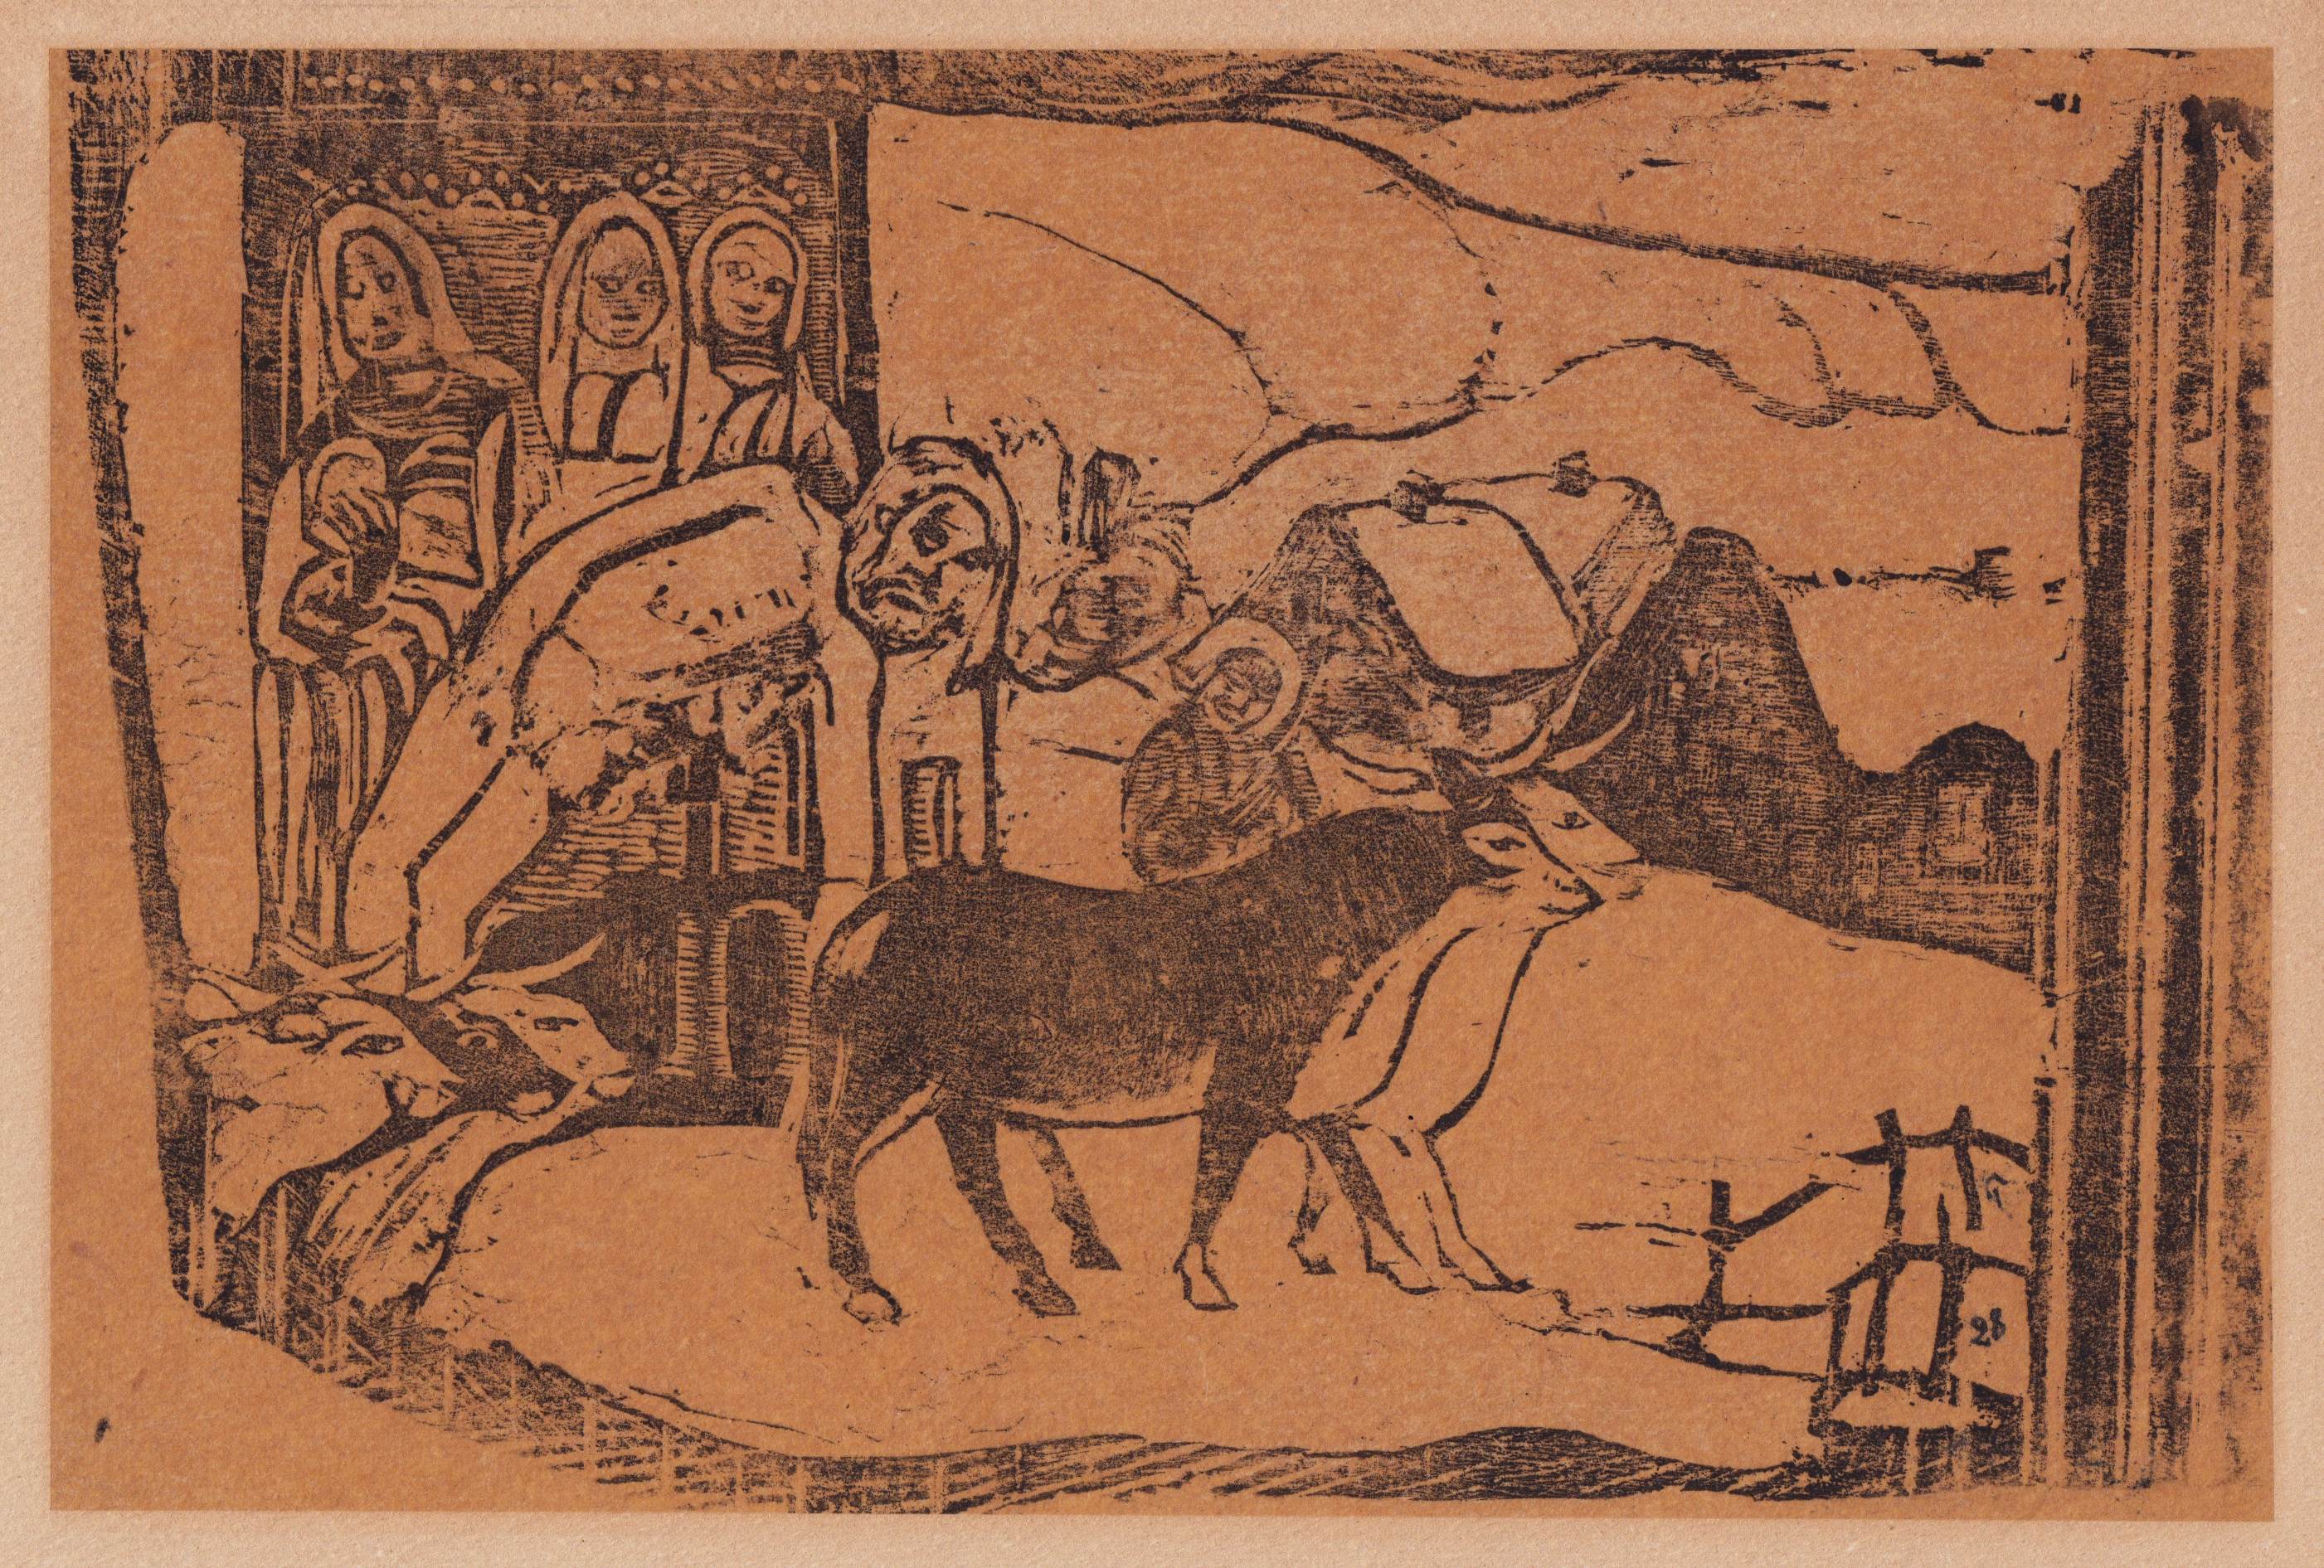 Paul Gauguin, Le Calvaire Breton, 1888-89, woodcut with ochre toning